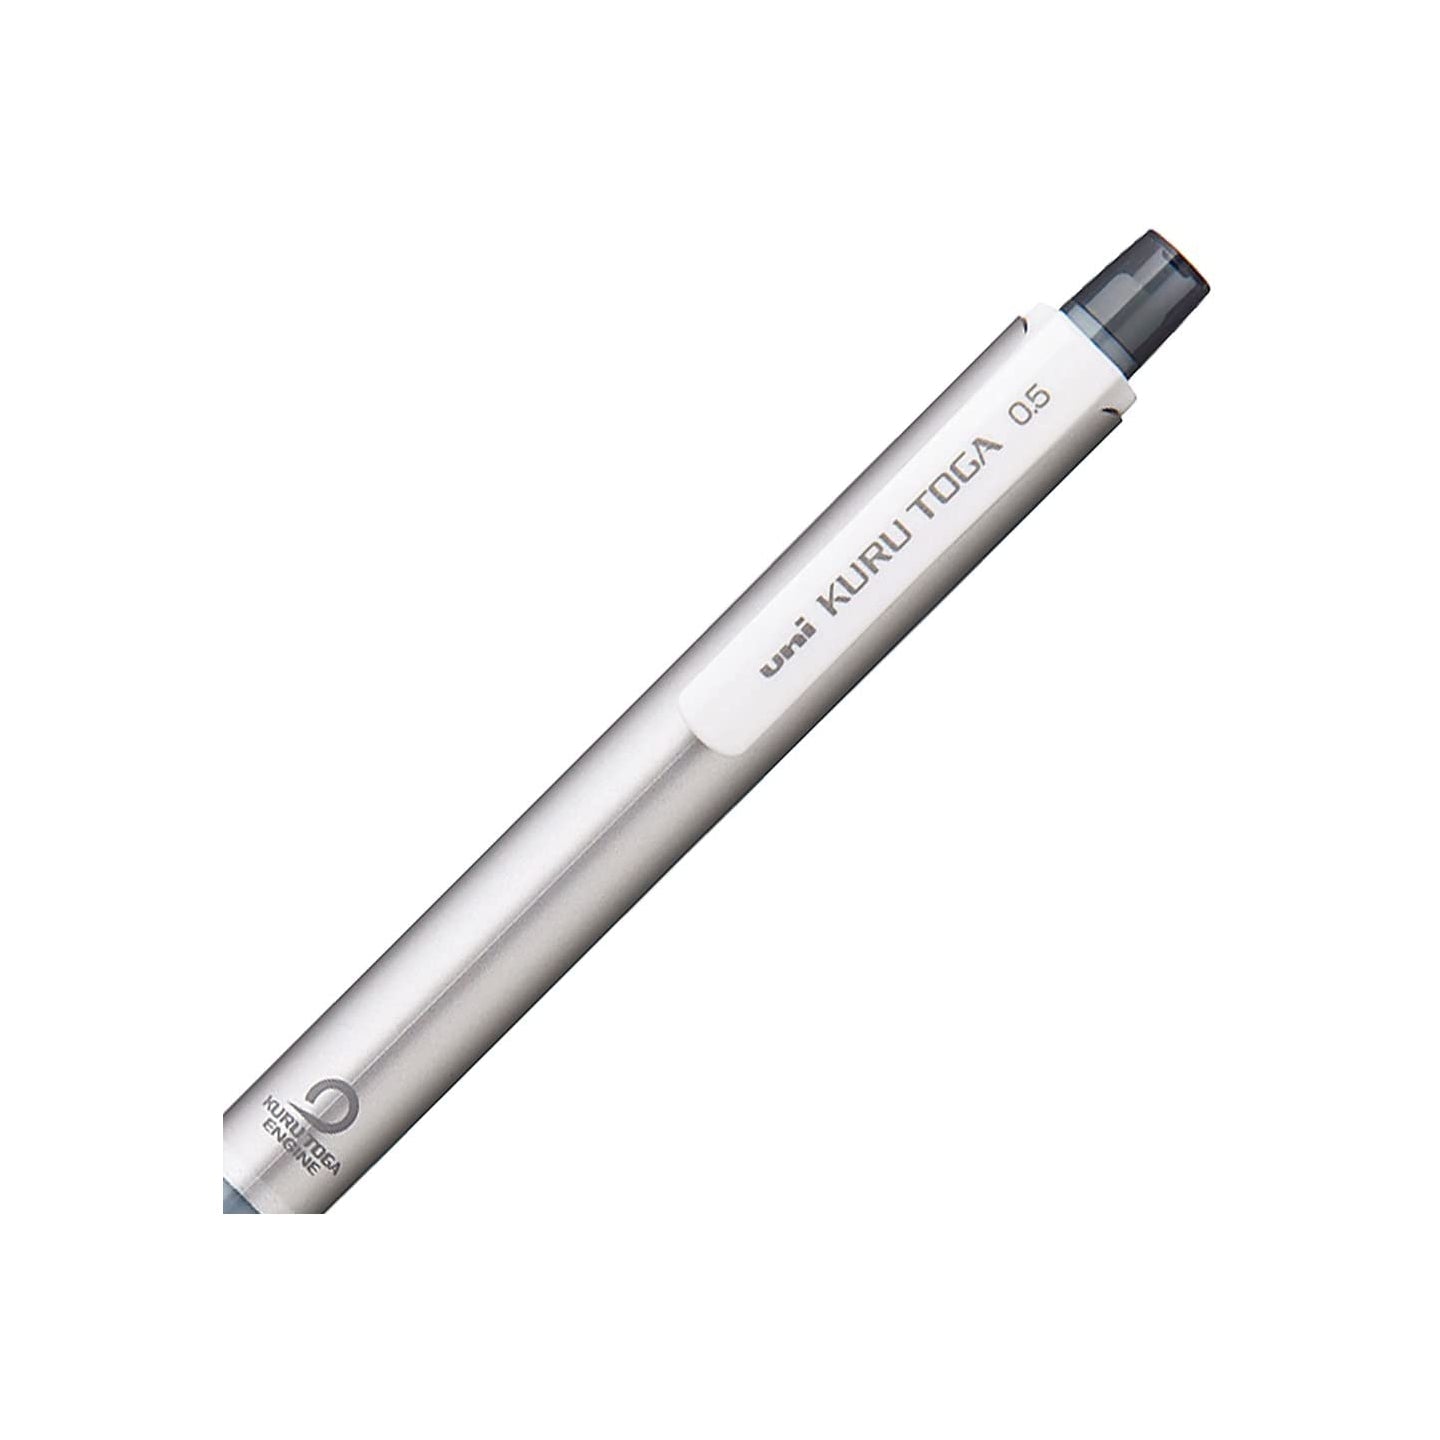 Uni Mechanical Pencil Kuru Toga 0.5mm Power Tool Services